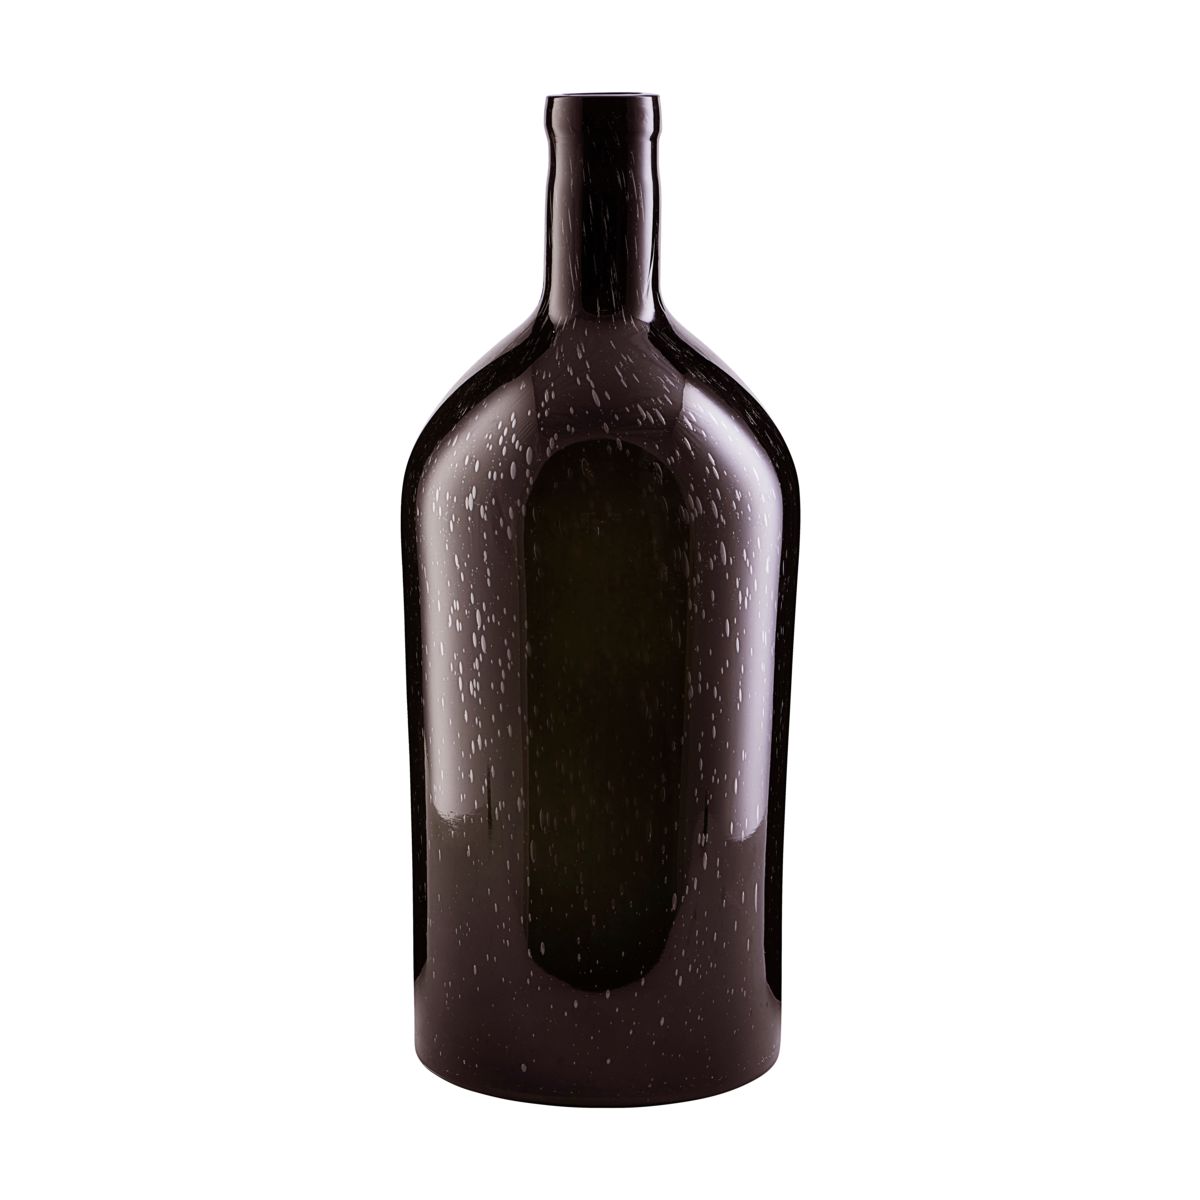 Vase Bottle by ermellino